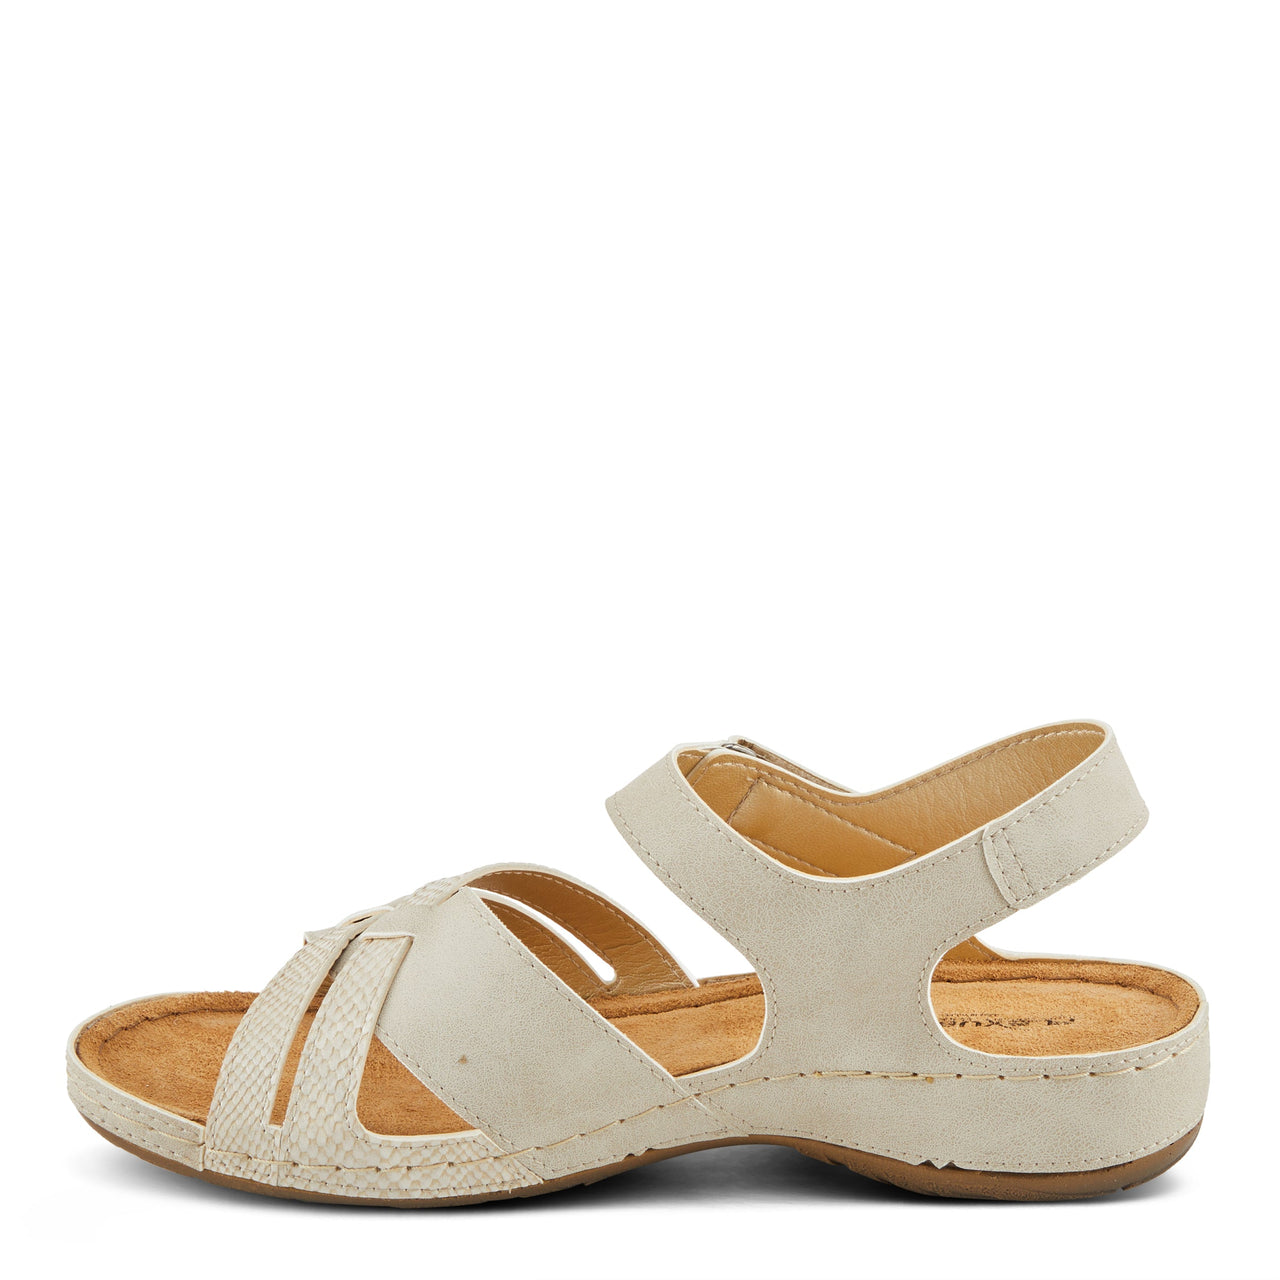 Spring Step Shoes Flexus Alvina Sandals - Front View walking on a sandy beach